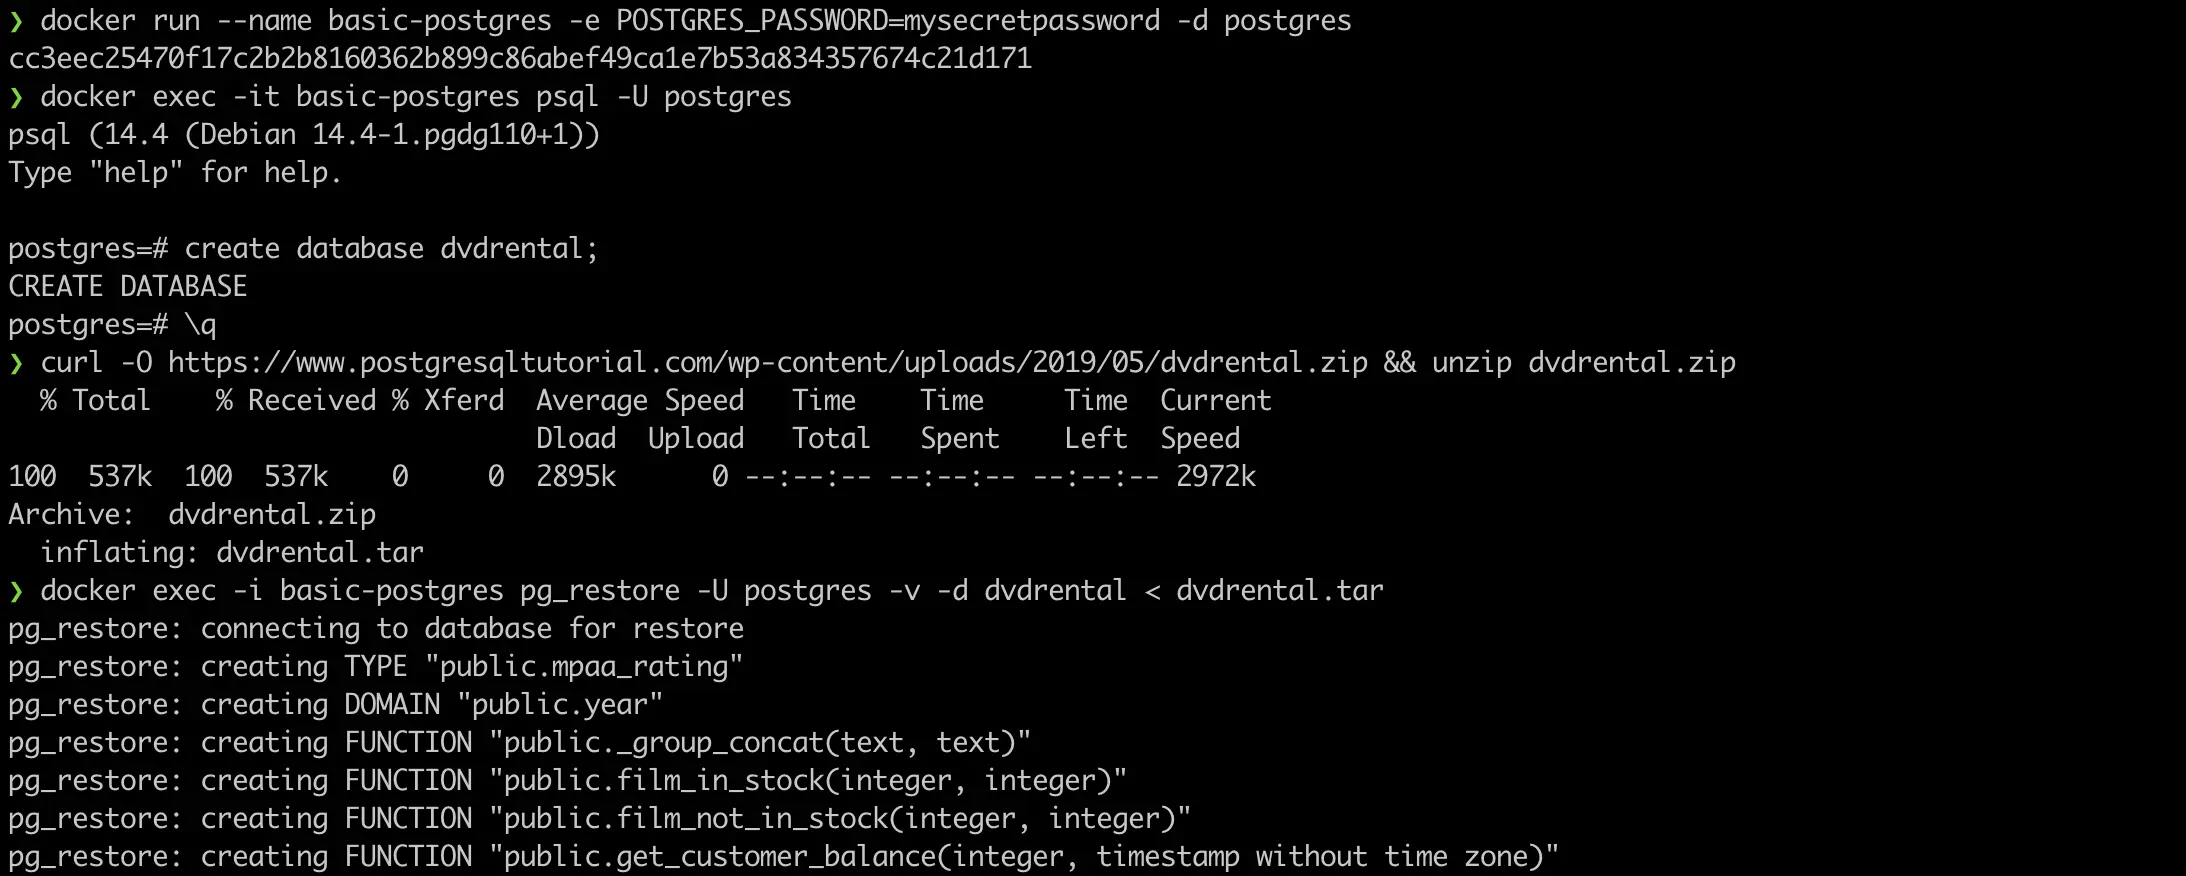 Screen shot of terminal showing import of dvdrental sample database into Postgres